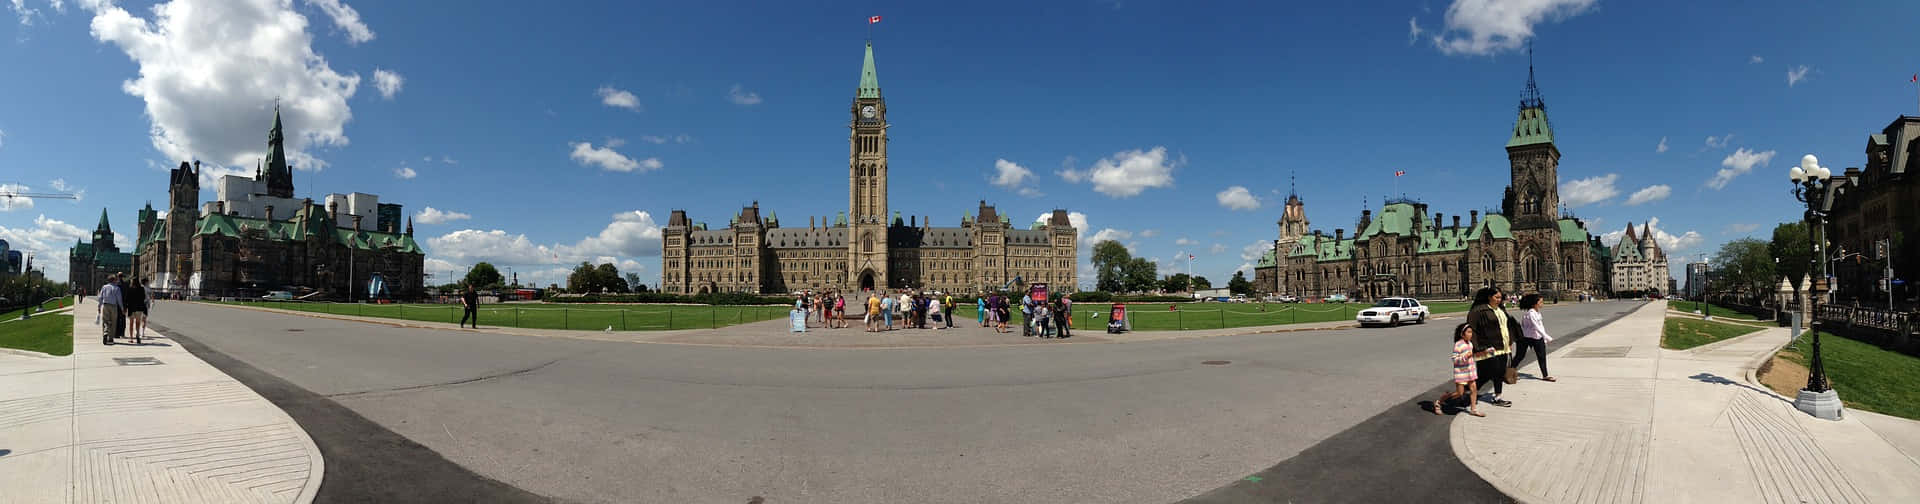 Parlamentshügelkanada Panoramabild